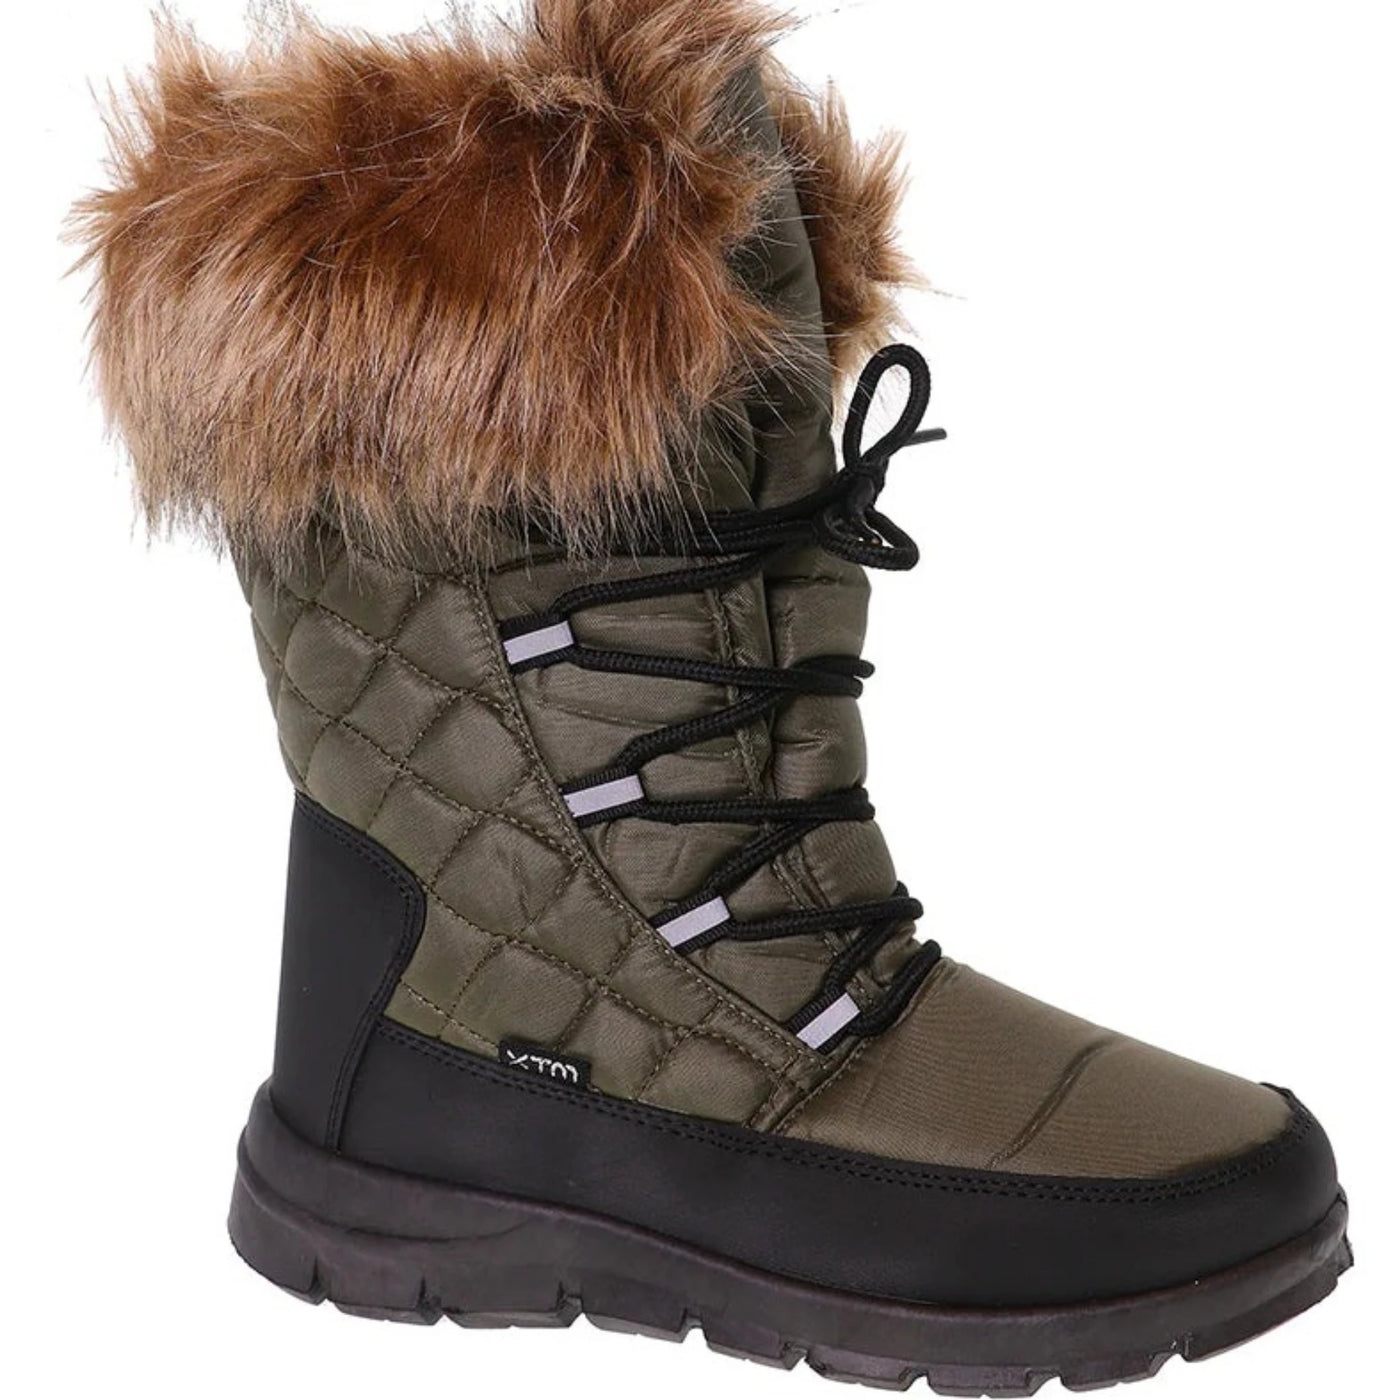 XTM Women's Inessa II Snow Boots - Winter Moss